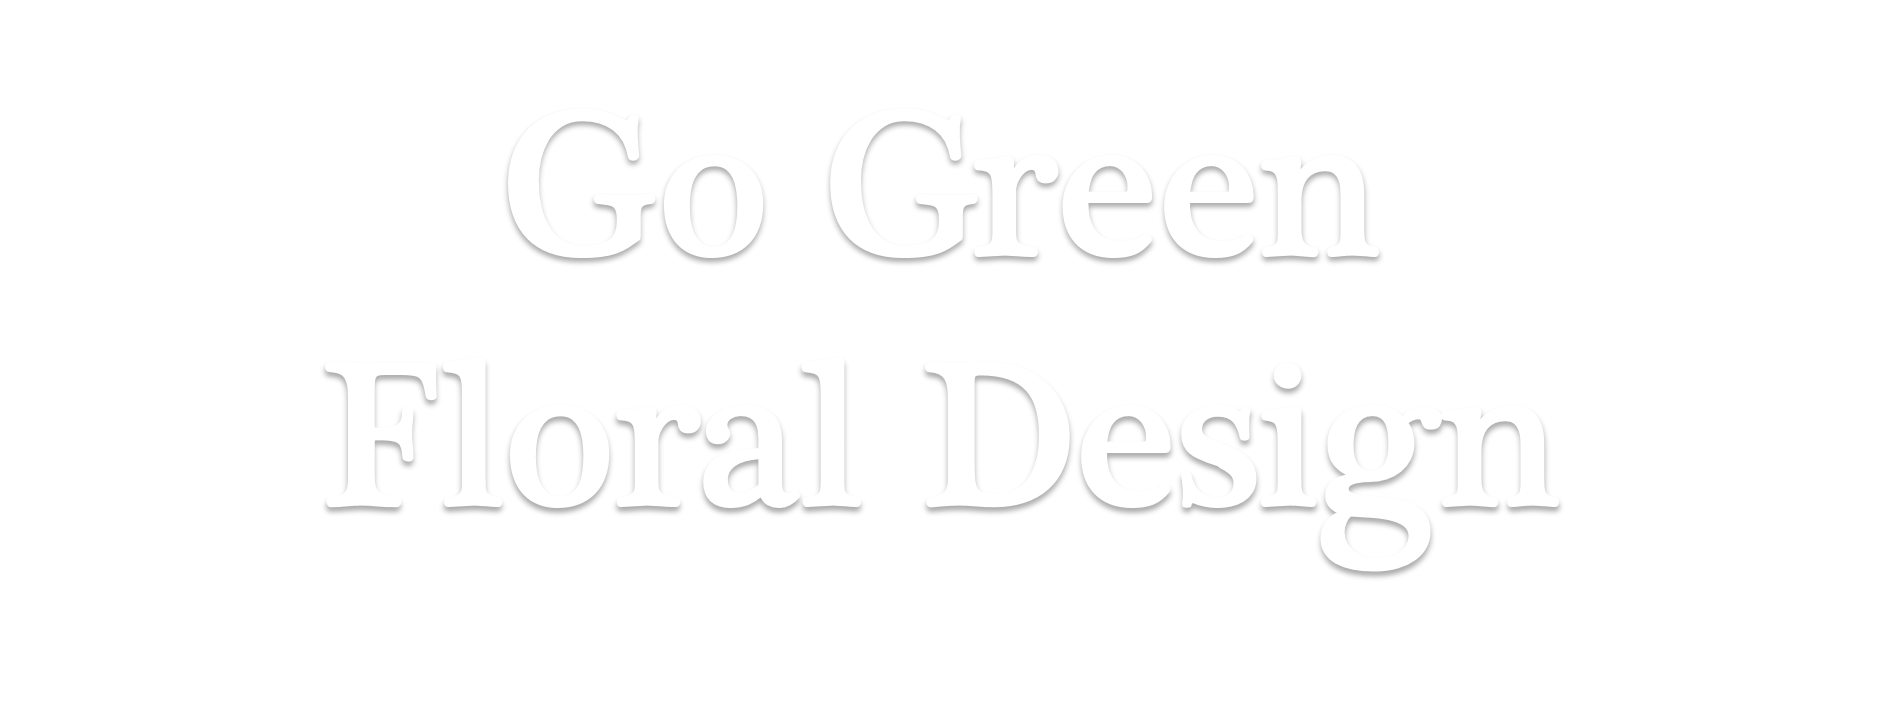 Go Green Floral Design - Flushing, NY 11367 - (888)789-4588 | ShowMeLocal.com